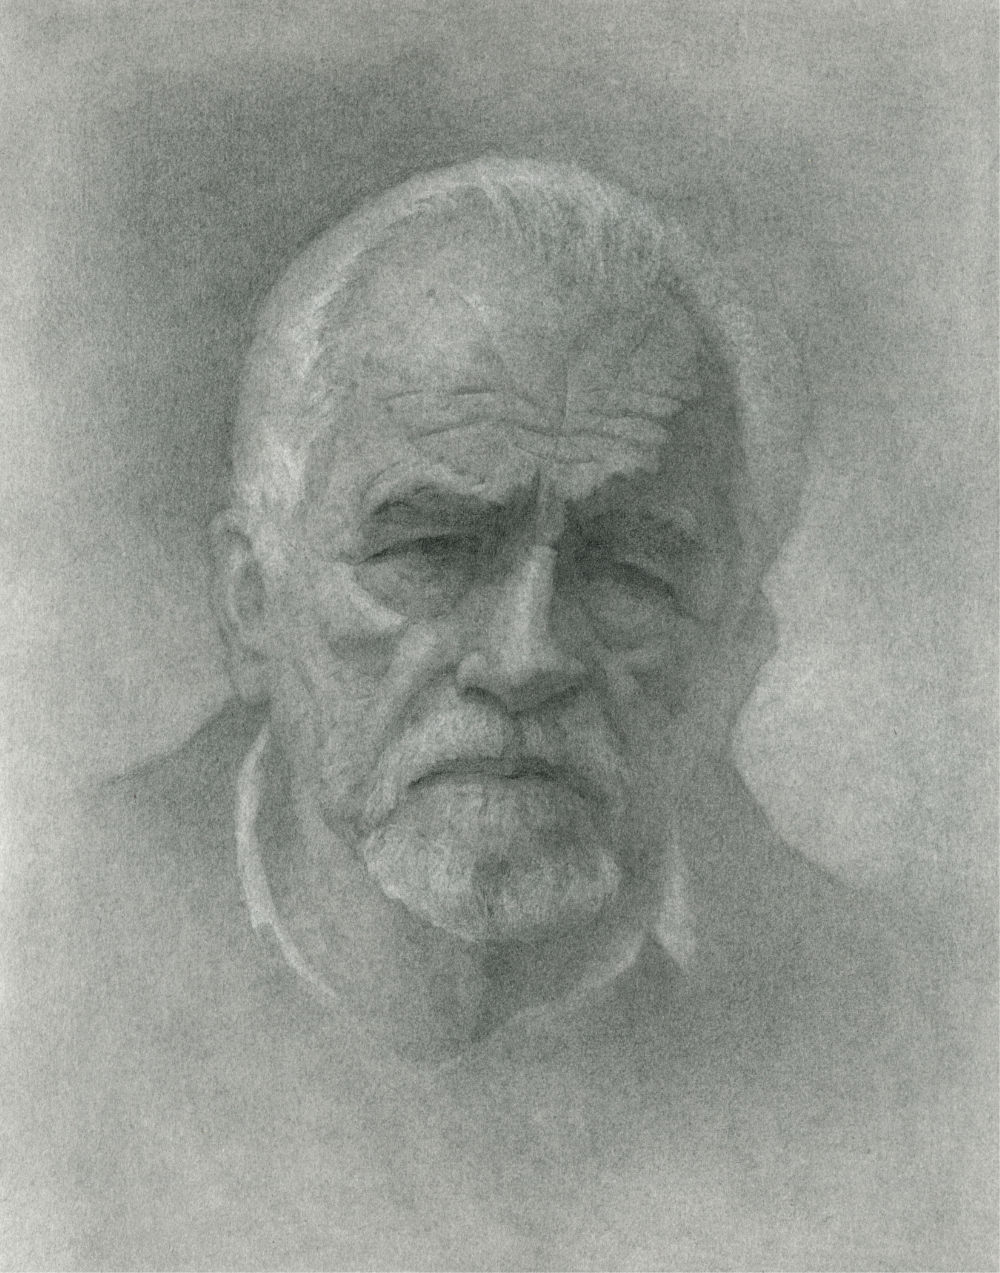 Logan Roy Succession Portrait Illustration, by Artist & Illustrator James Martin